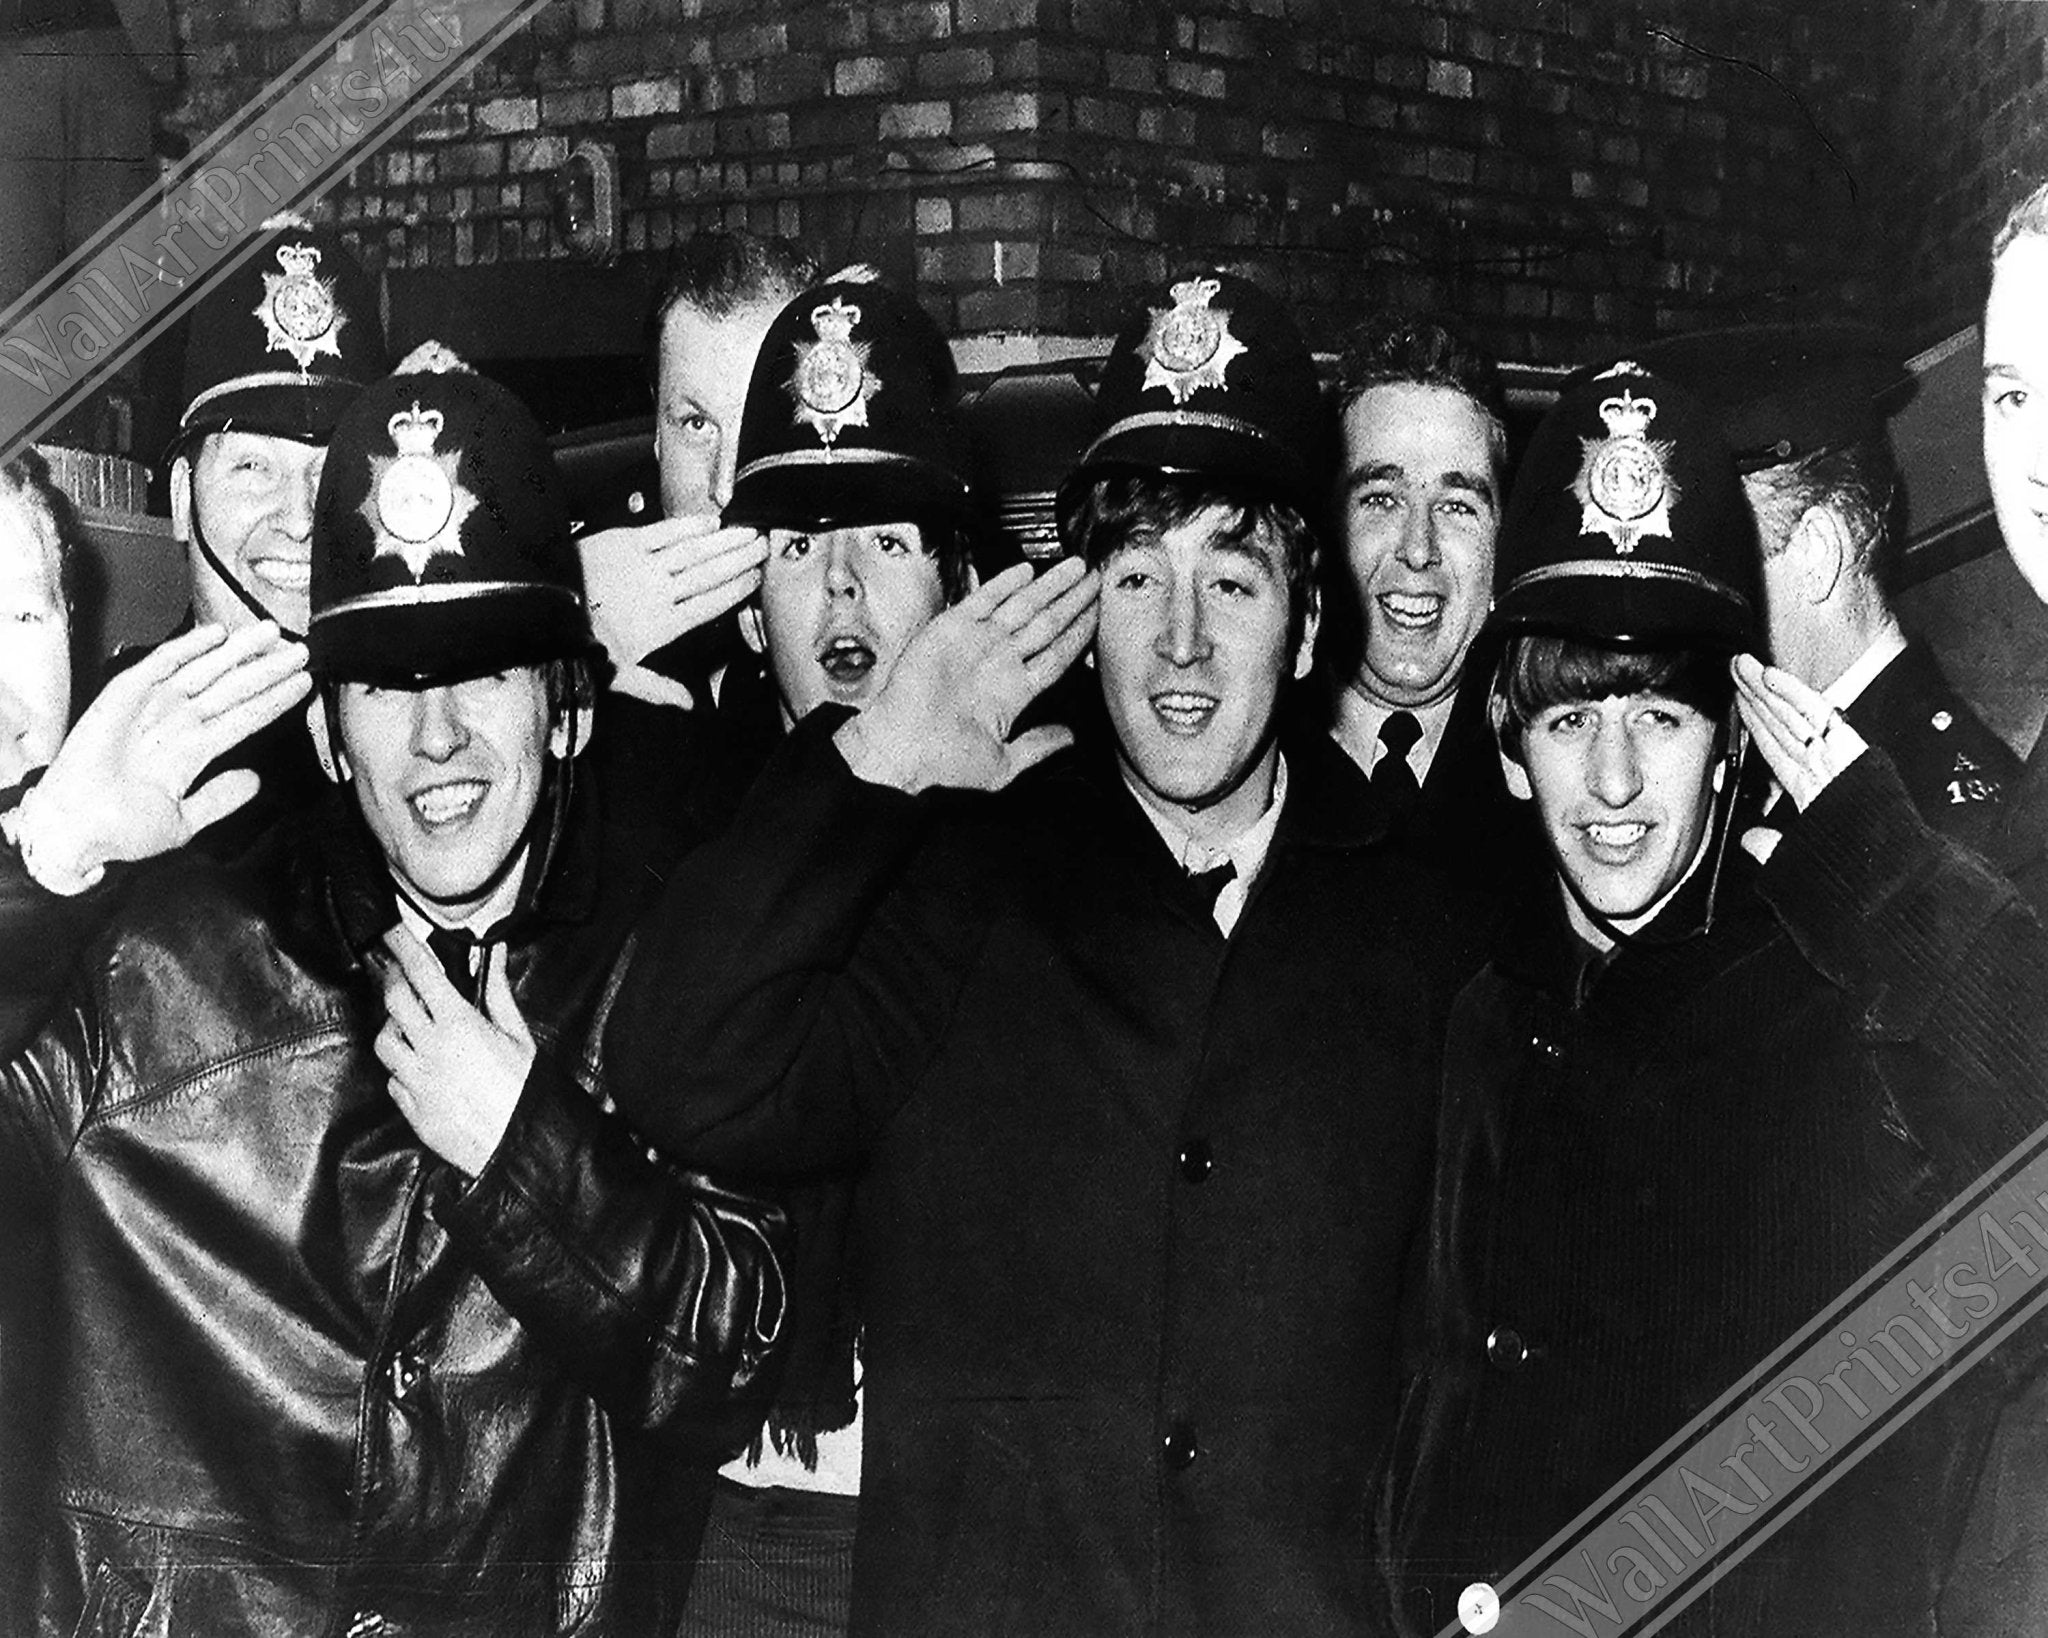 The Beatles Canvas, Posing With Police, Vintage Photo Portrait - The Beatles Birmingham Hippodrome - WallArtPrints4U